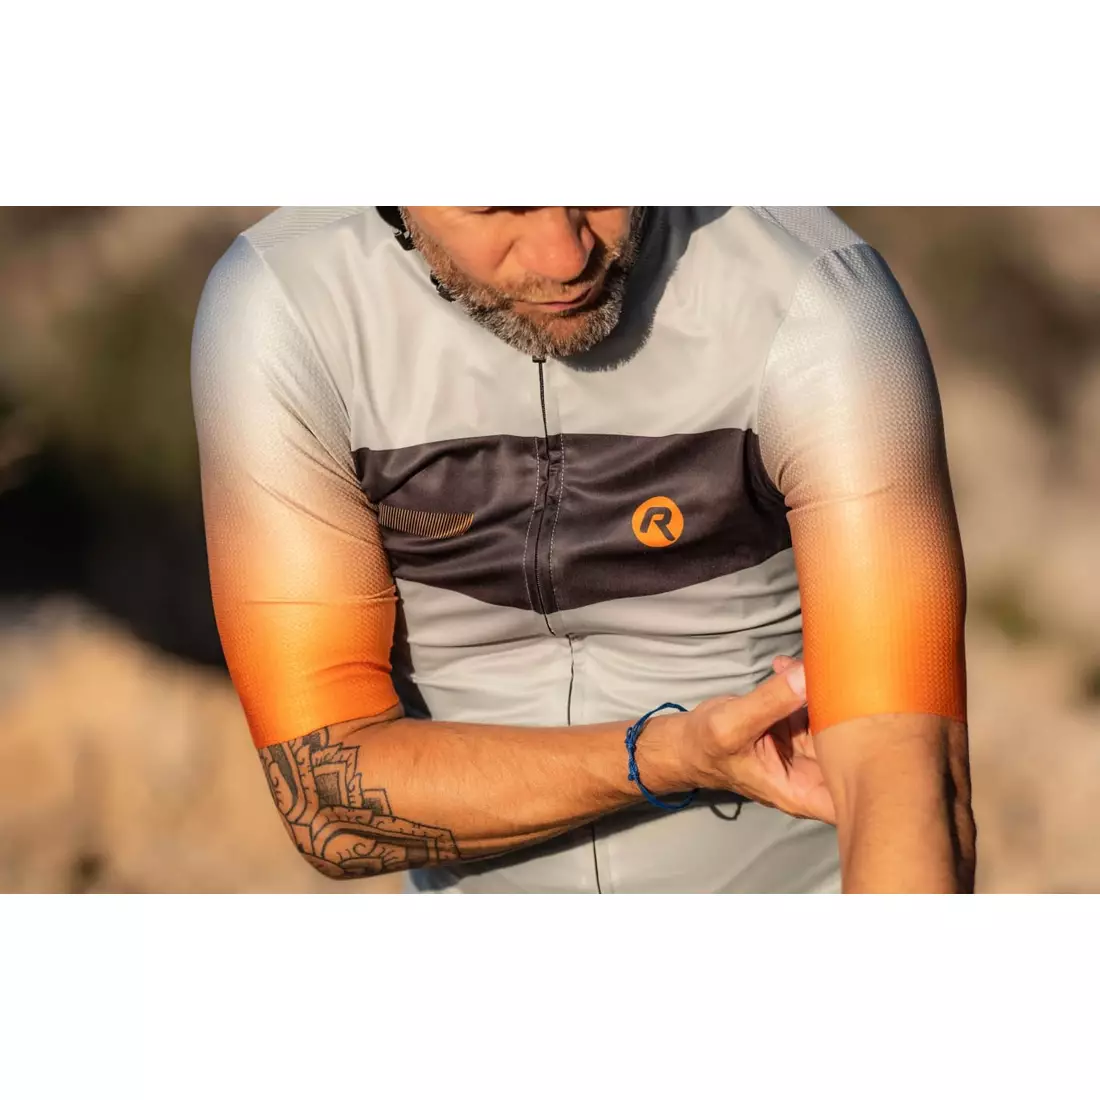 Rogelli DAWN men's cycling jersey, grey-orange